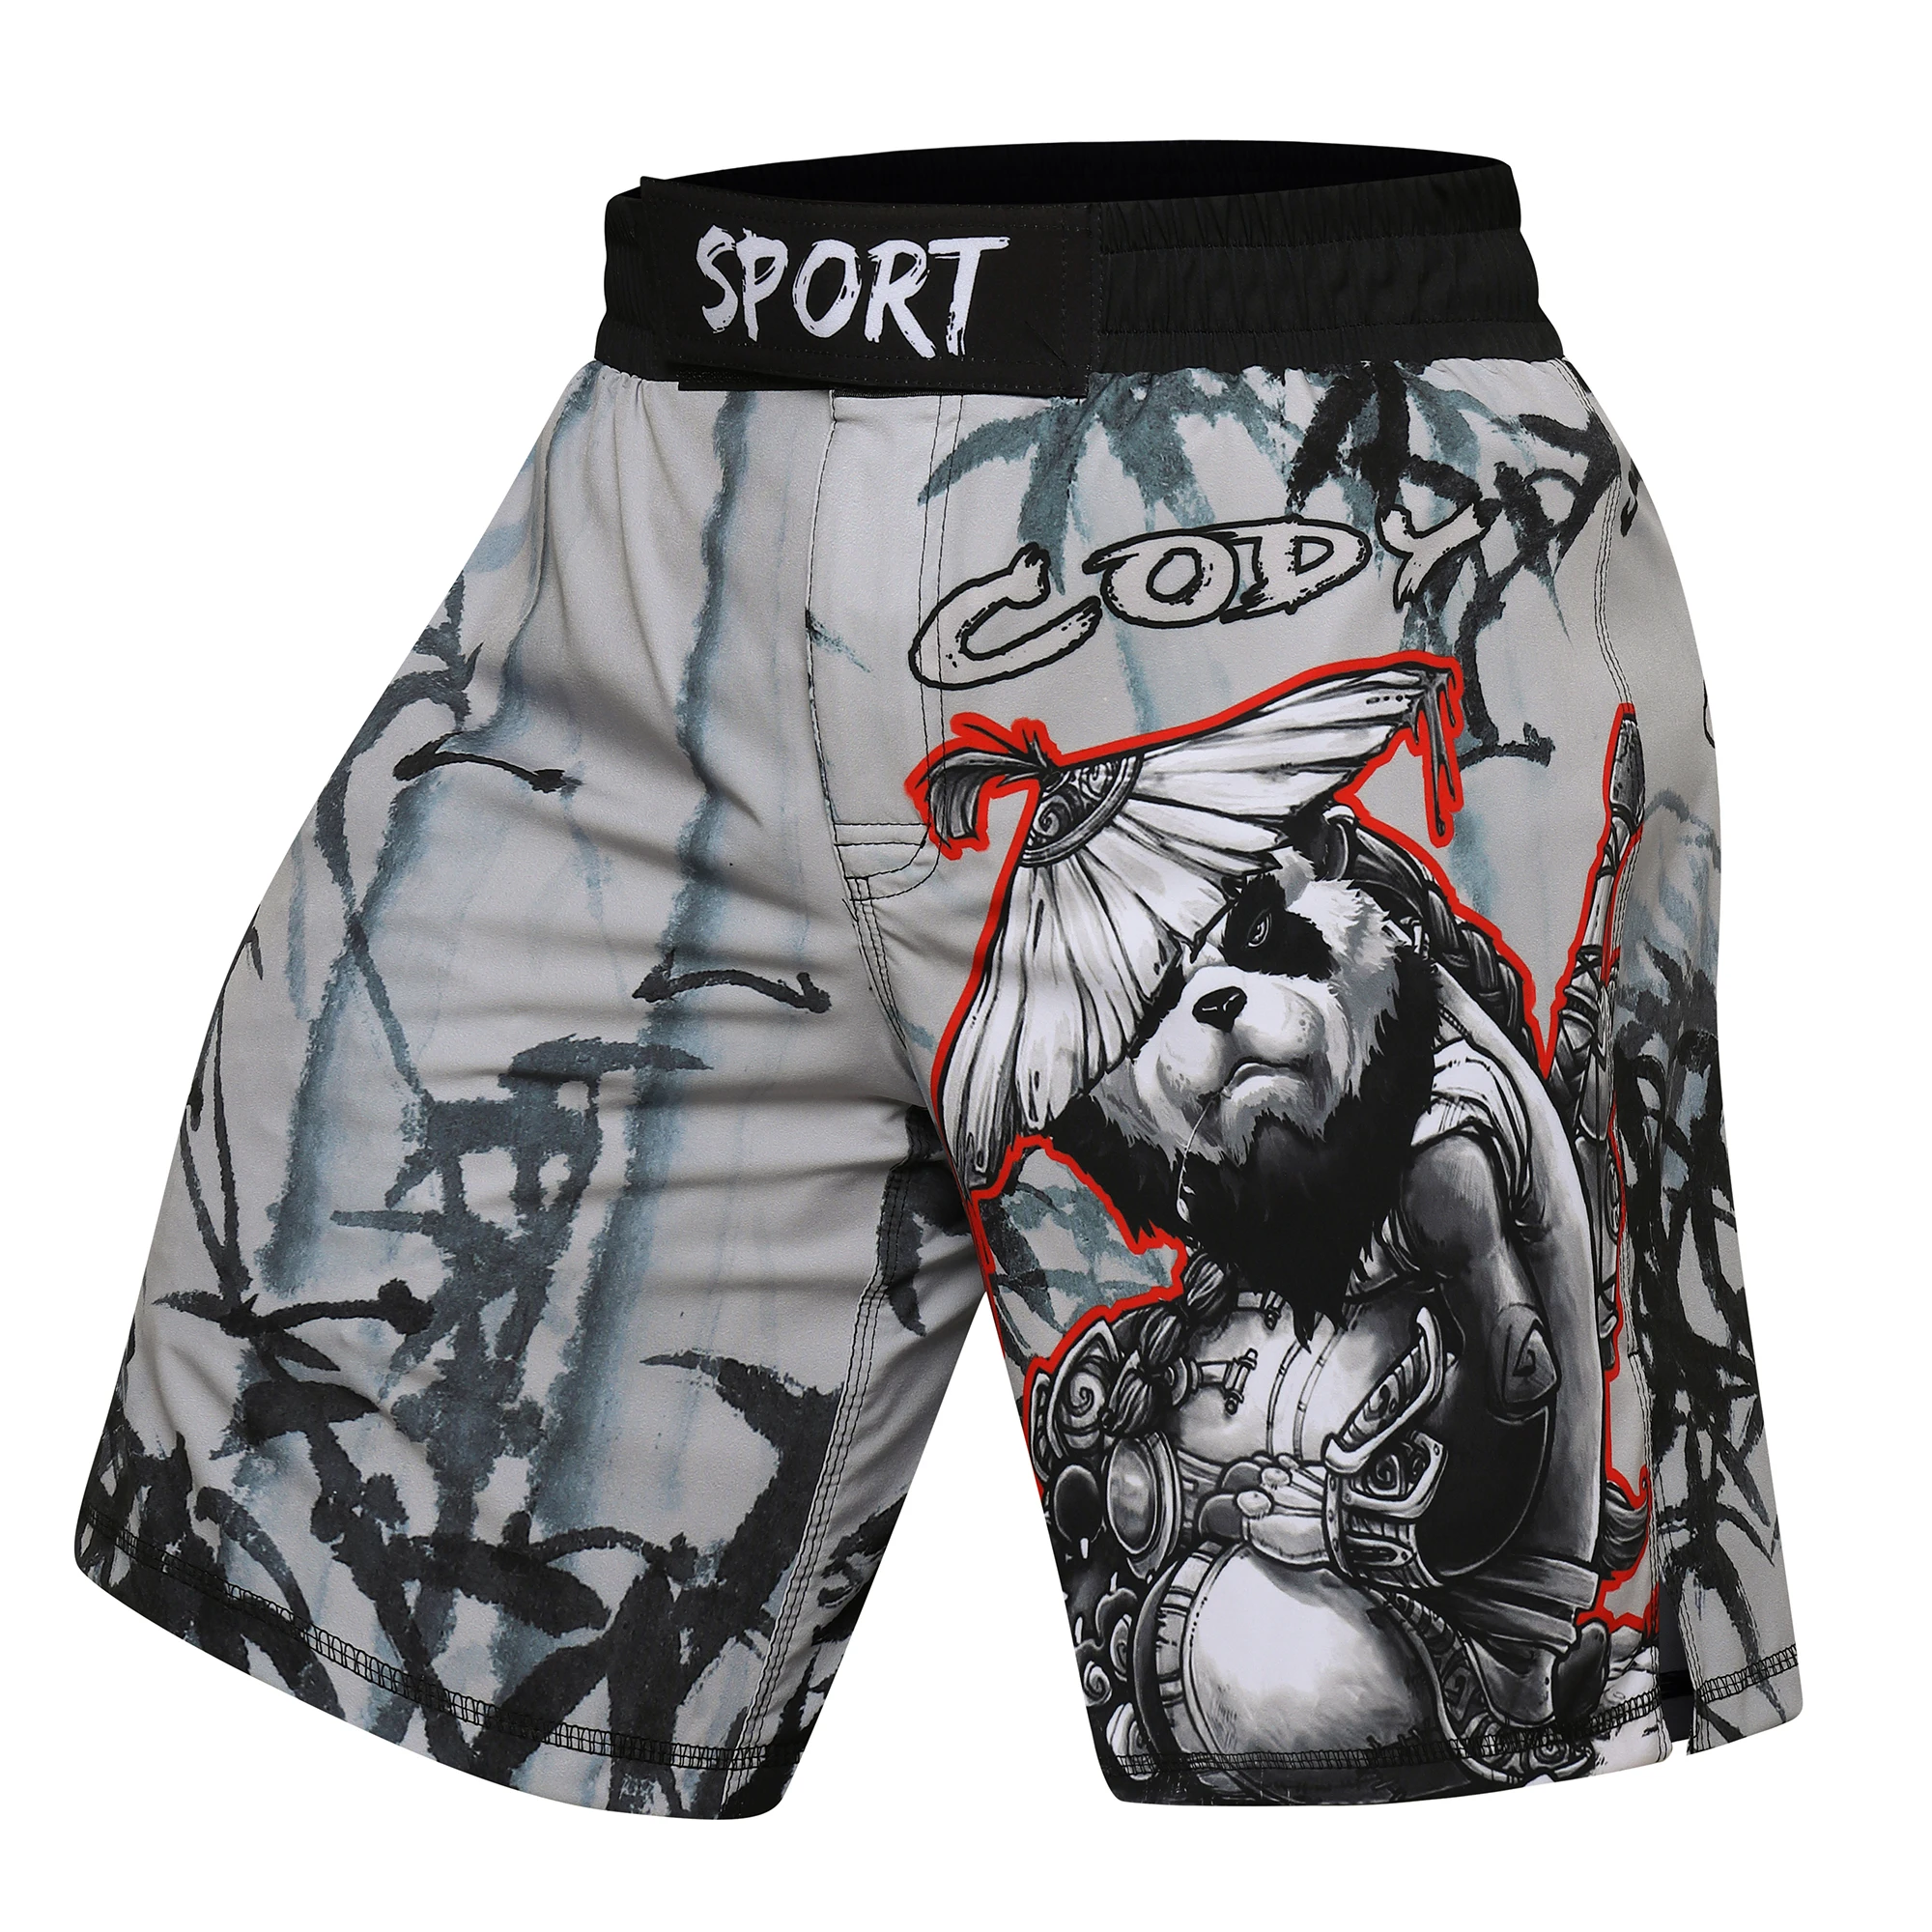 Cody Lundin Custom Carton MMA Clothing Full Sublimation Printed Jiu Jitsu Shorts Gym Fitness Running Boxing Fight Short For Men